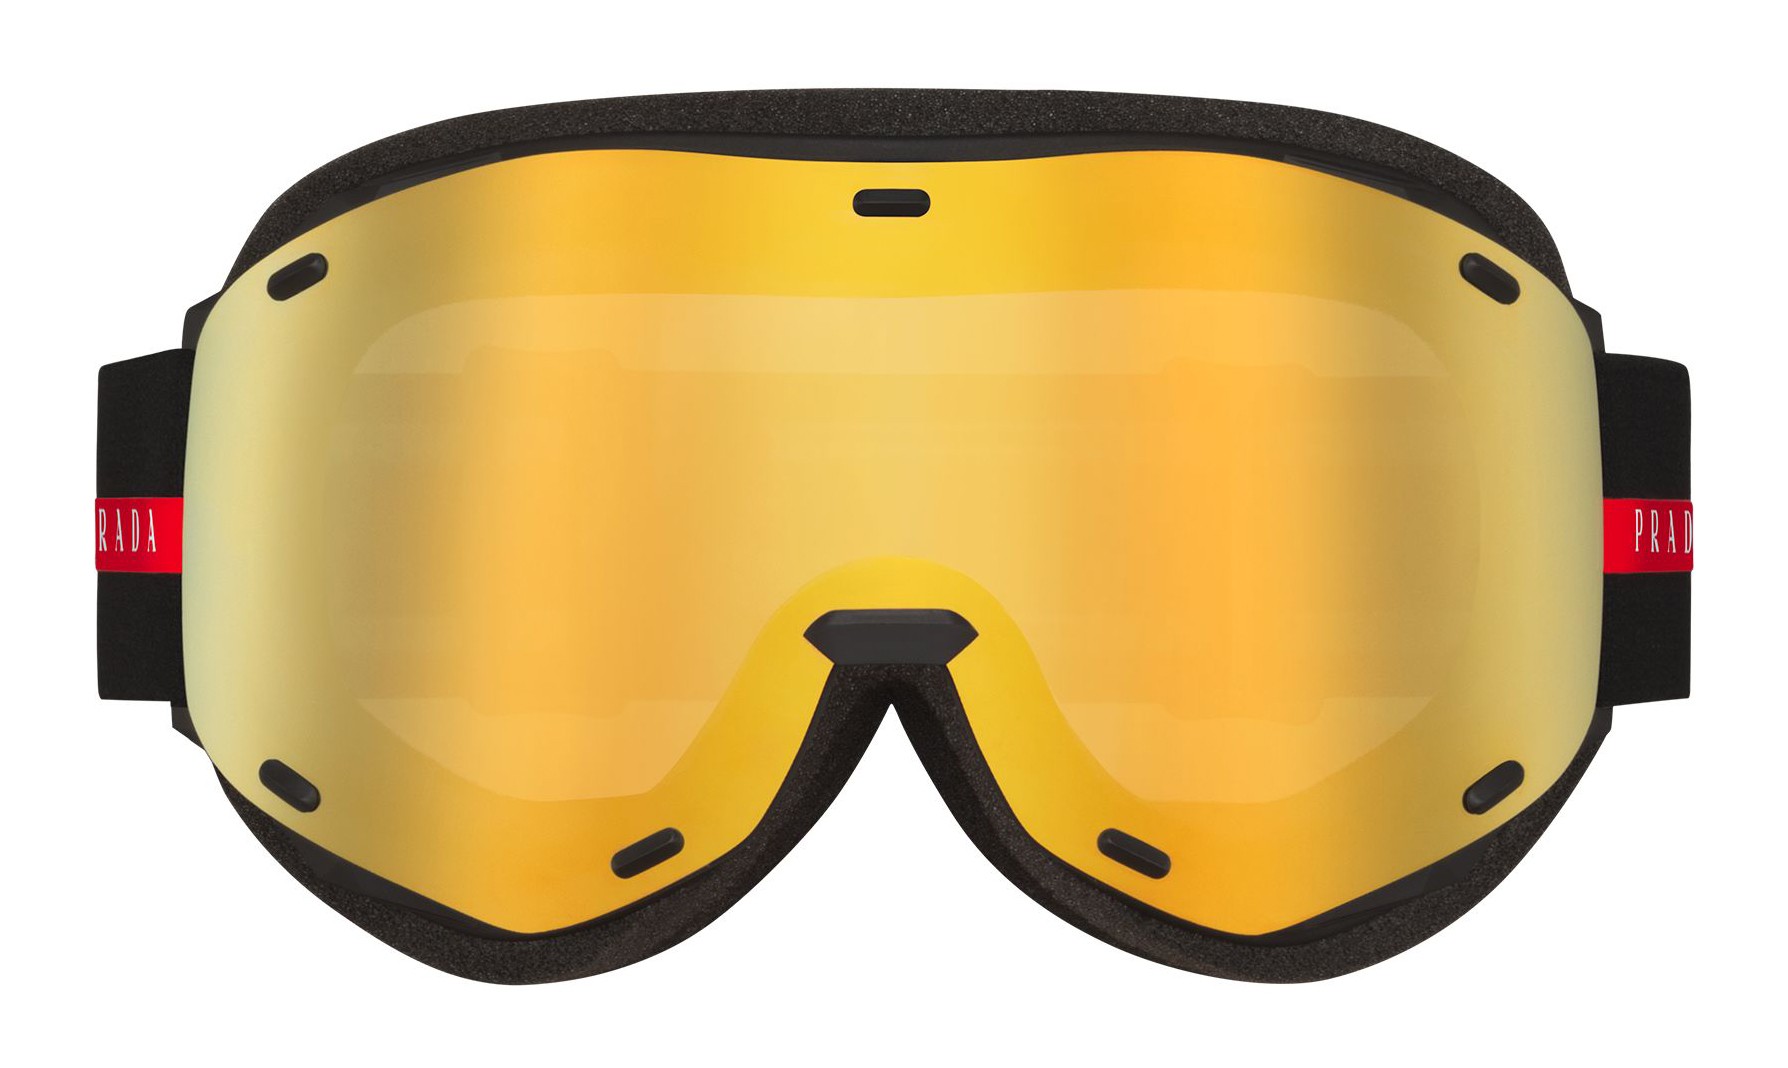 Prada Ski Goggles See more at WWW.TRANSFER.DESIGN #Prada #Ski